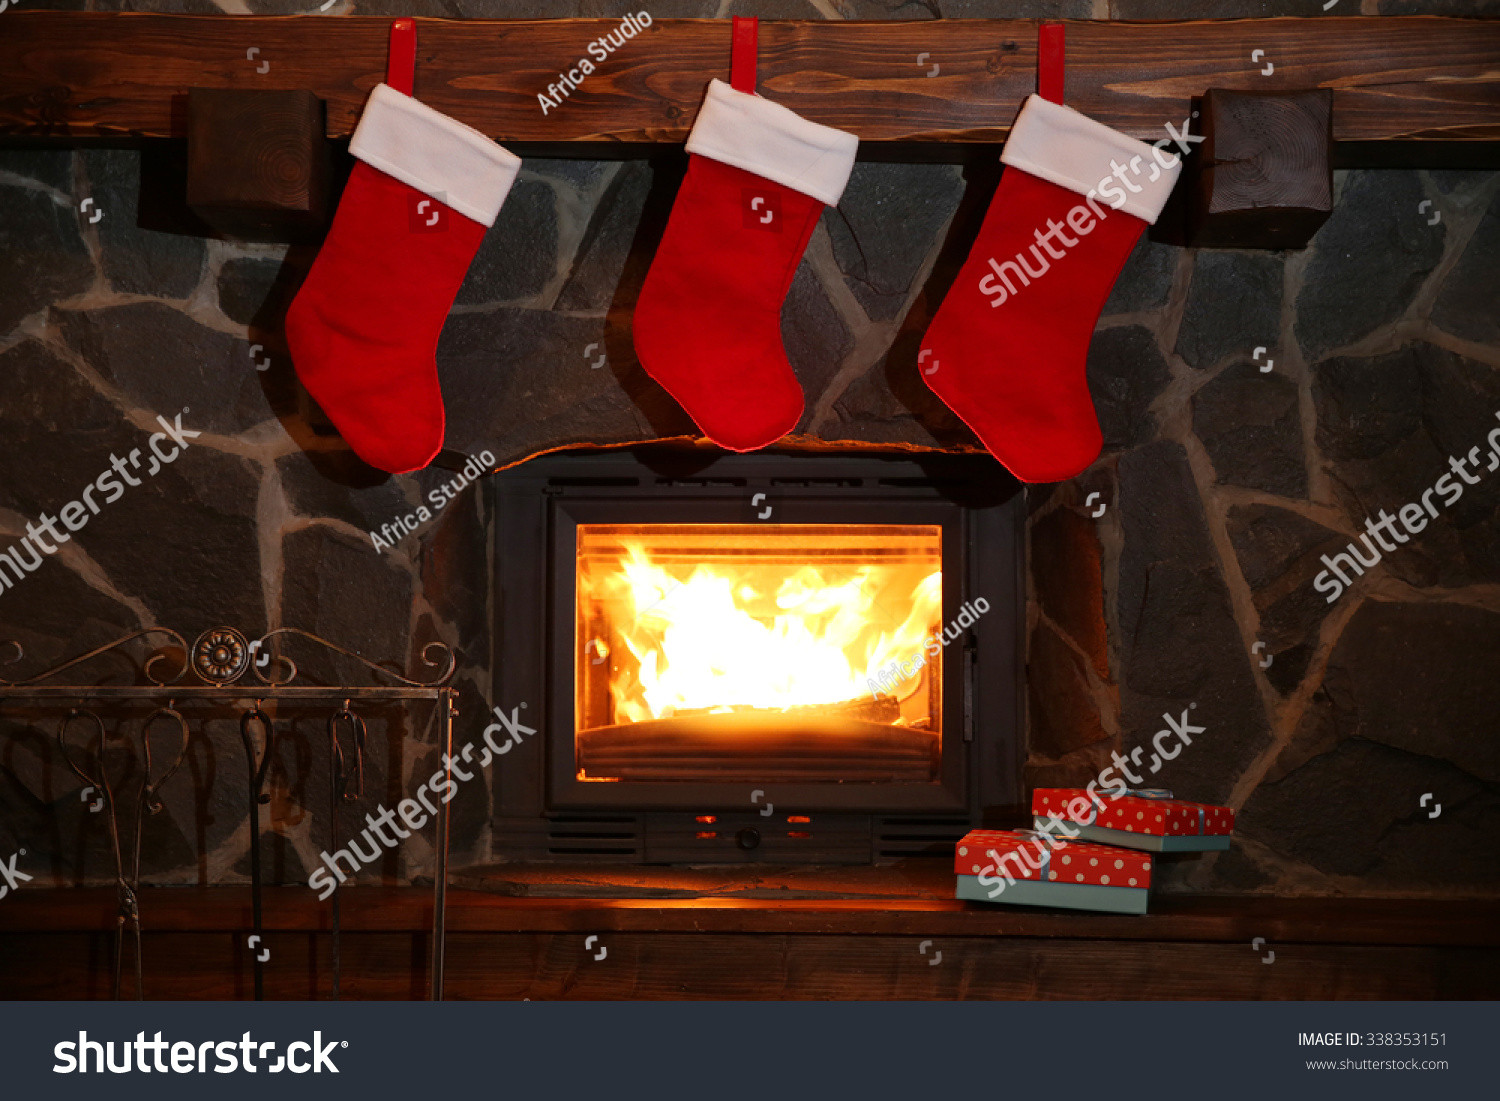 Christmas Stockings Hanging Over Fireplace
 Christmas Stockings Hanging Over The Fireplace At Midnight